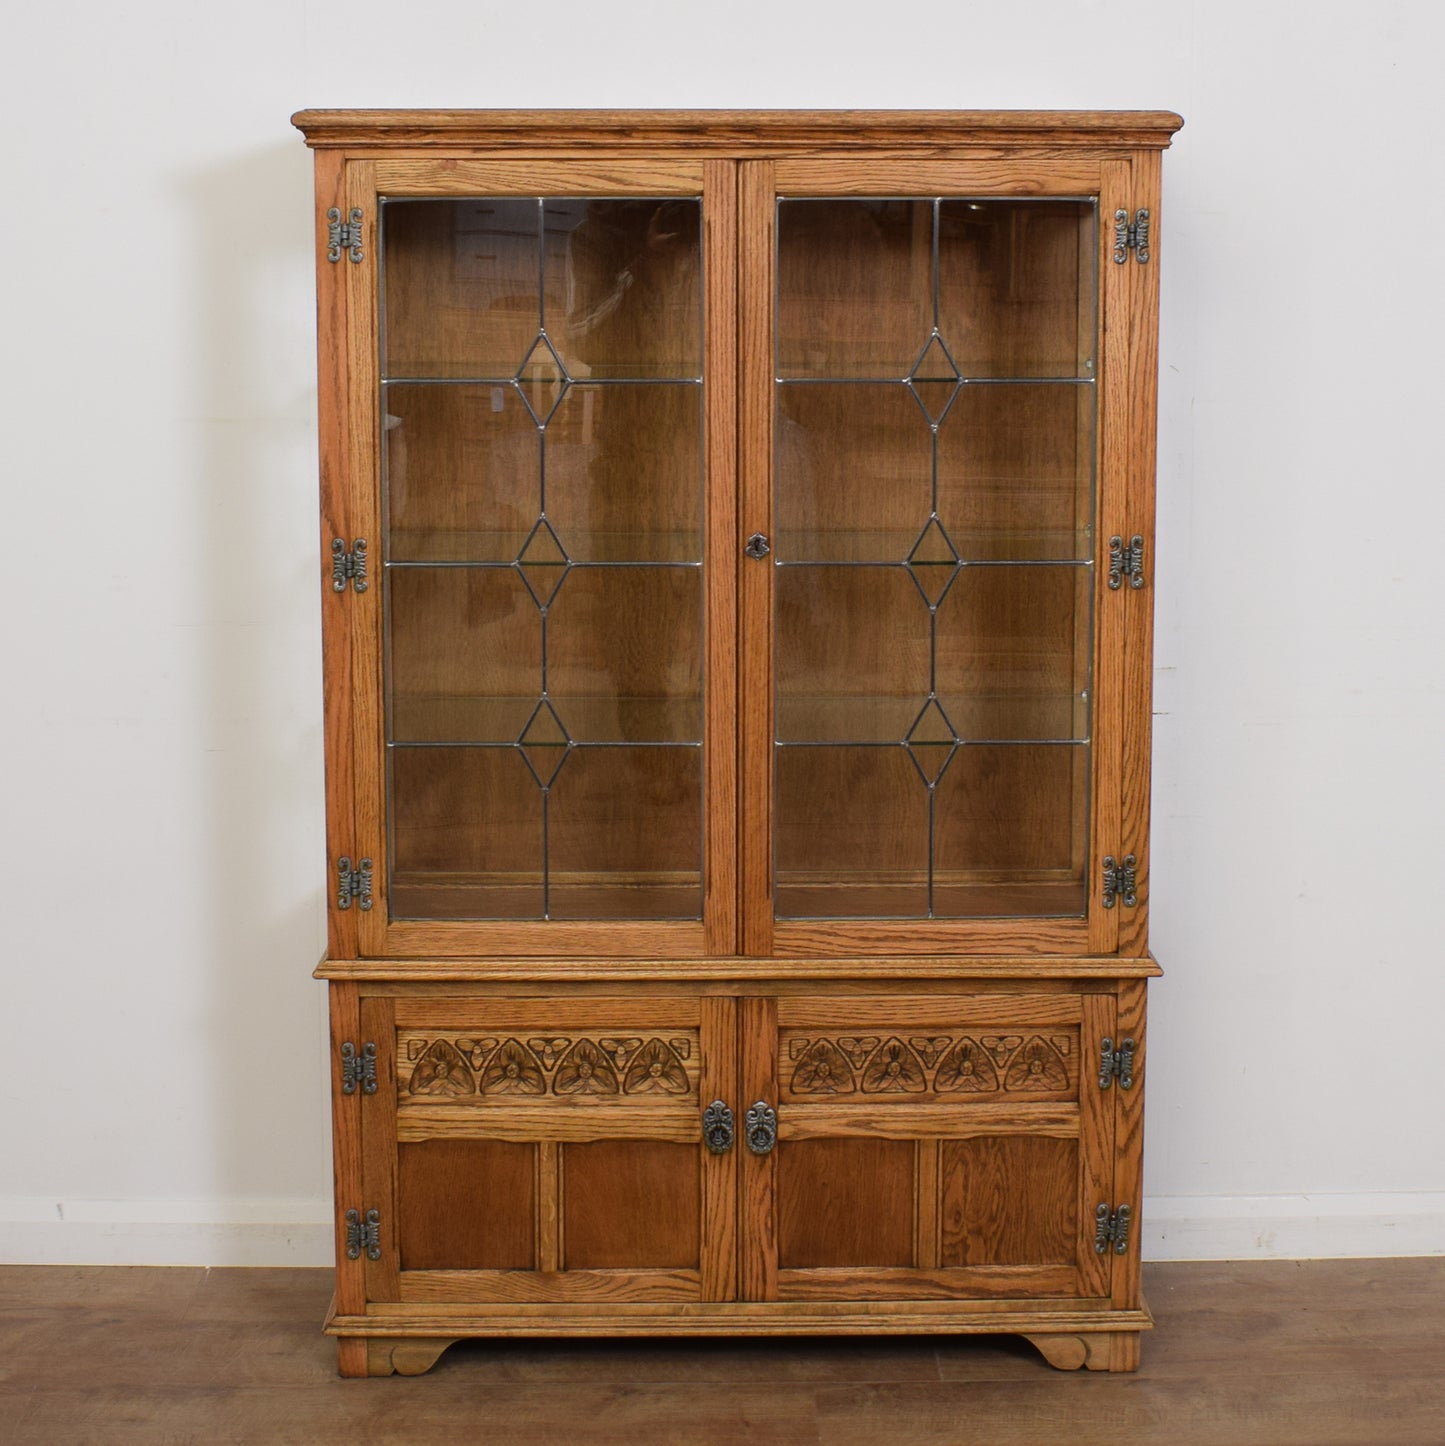 Restored Old Charm Glazed Cabinet